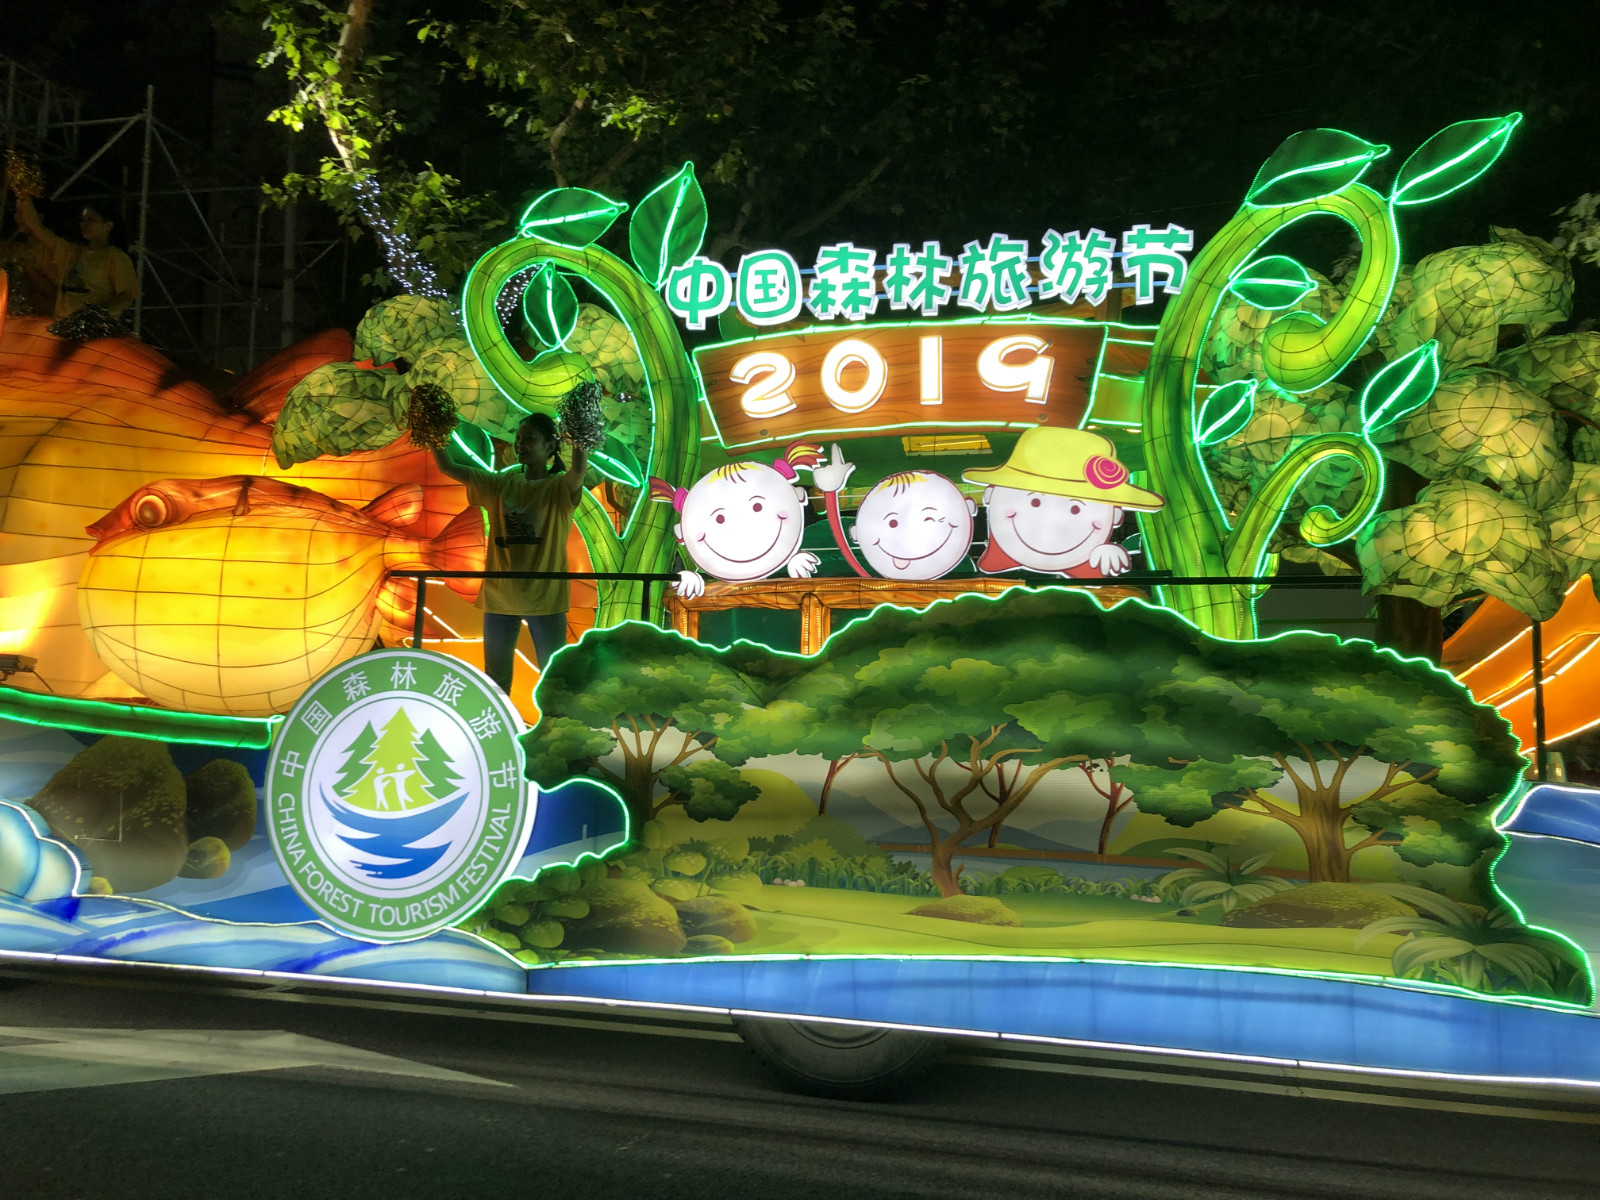 China Focus: Shanghai tourism festival witnesses consumption upgrade